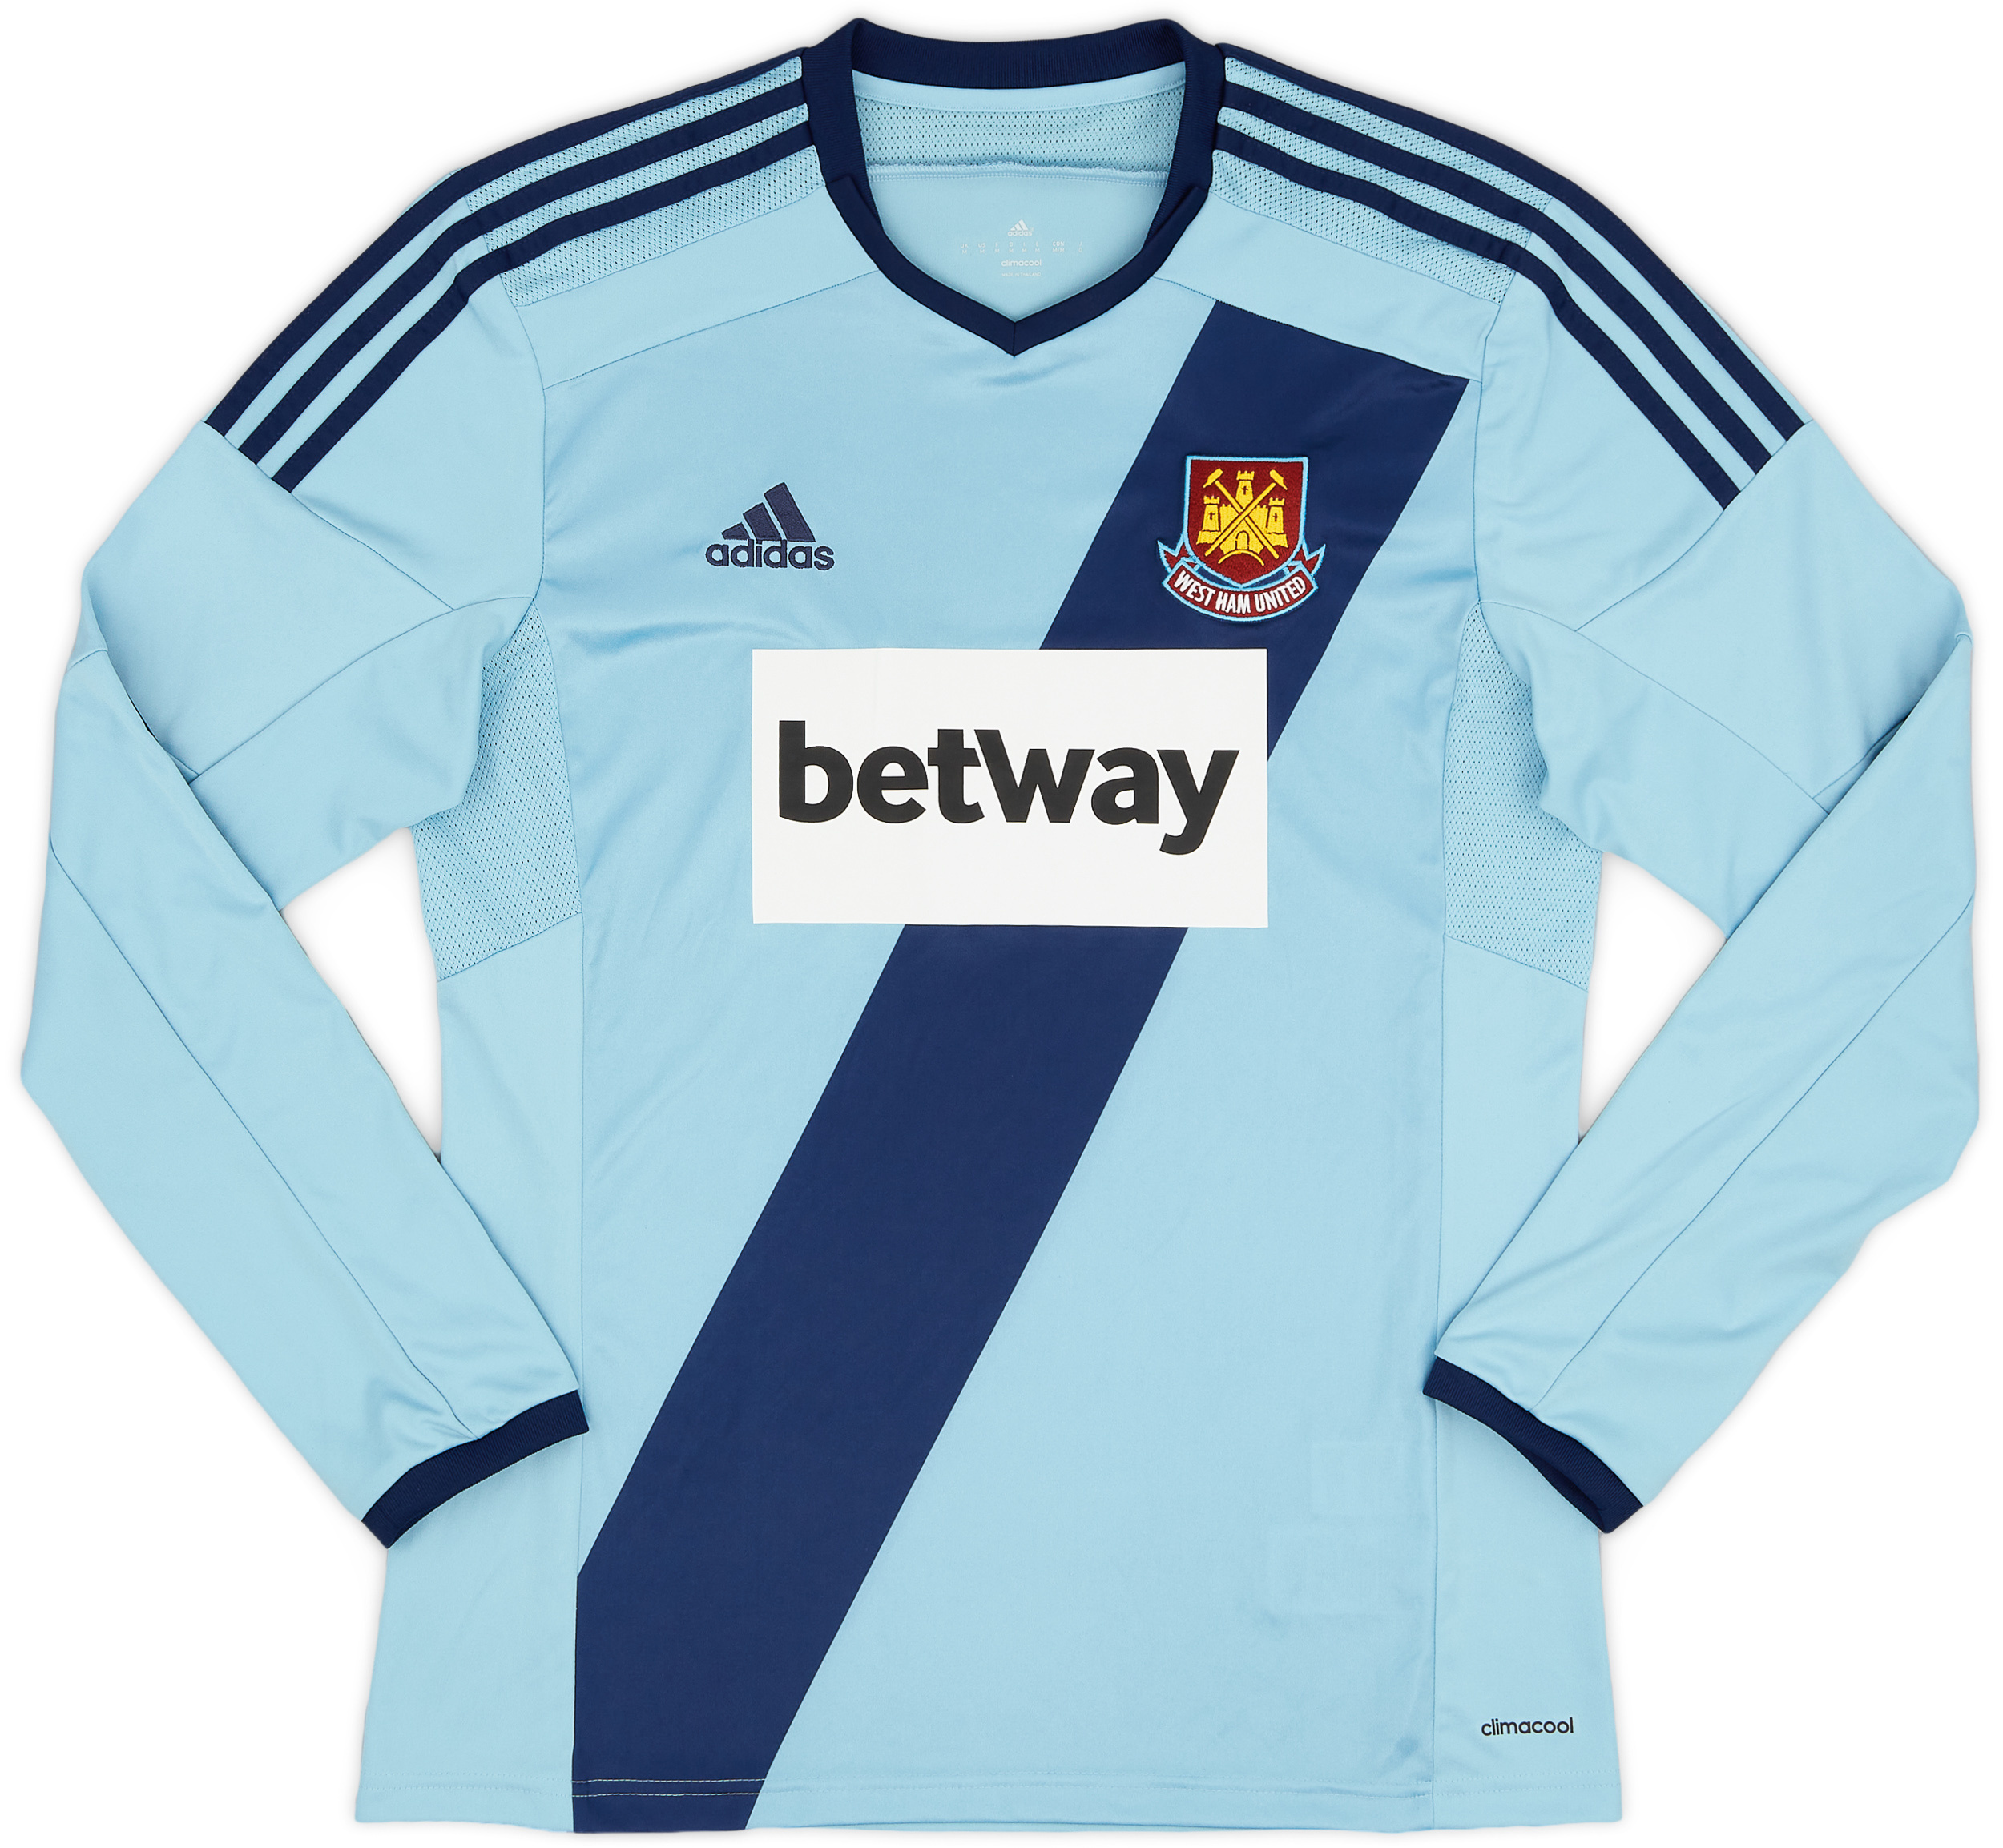 2014-15 West Ham United Away Shirt - 9/10 - ()